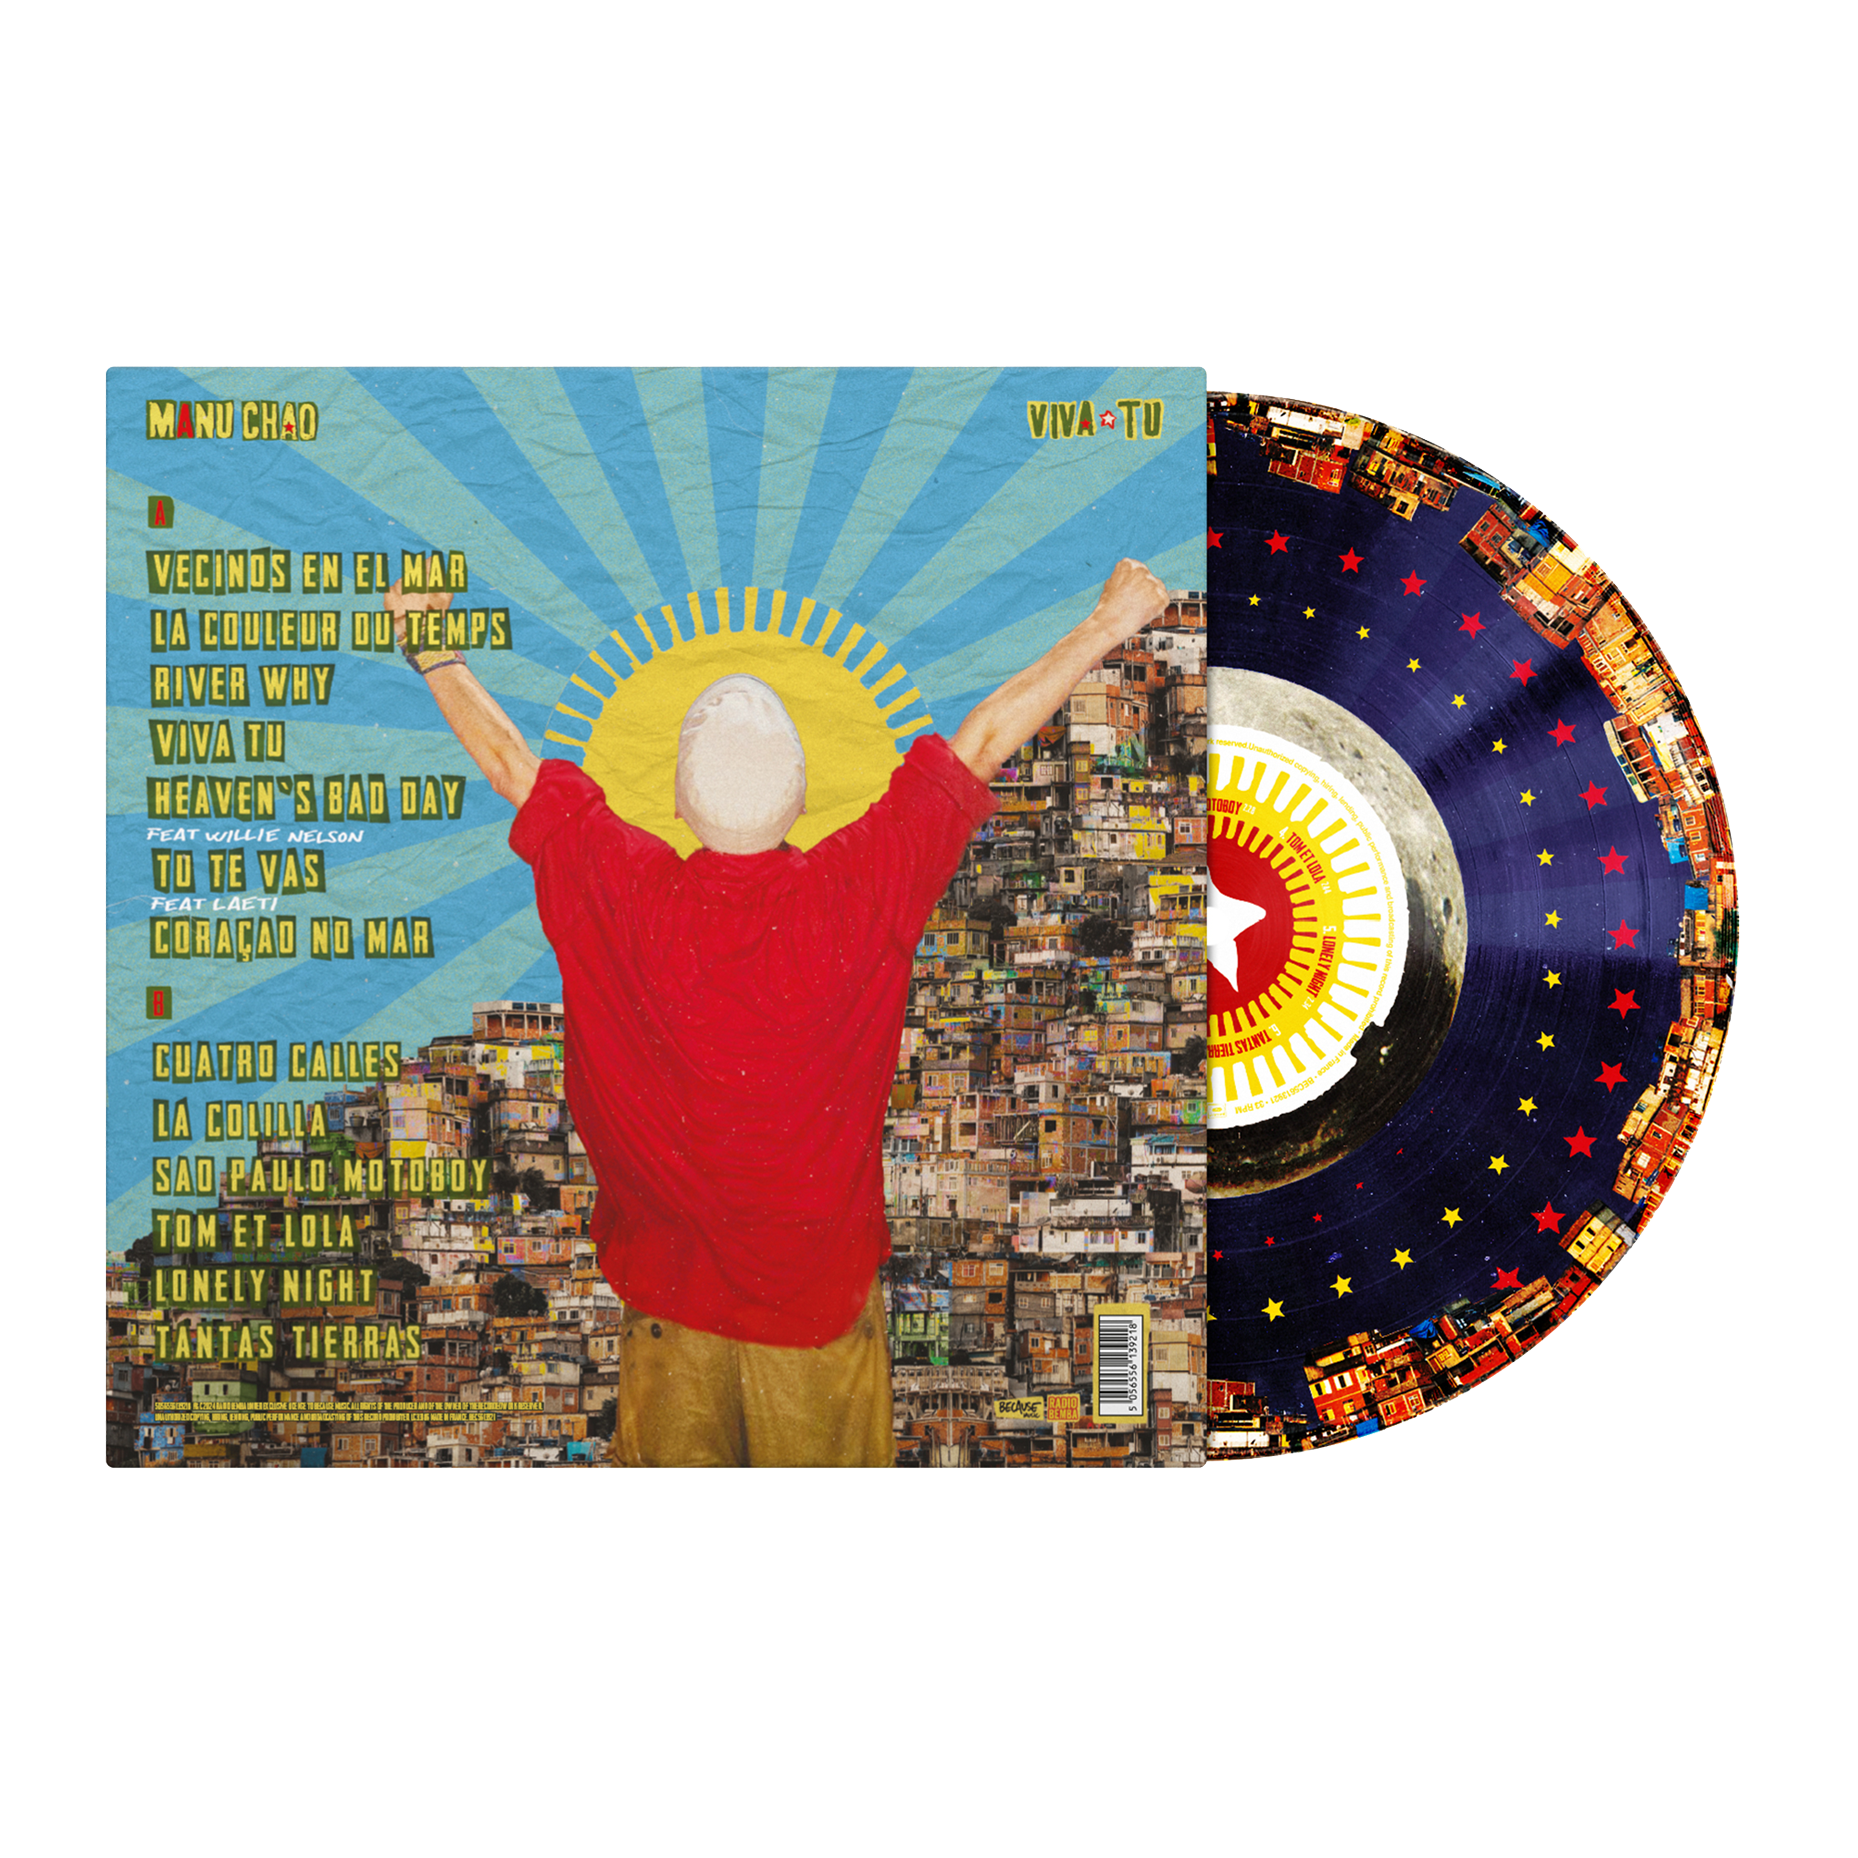 Manu Chao - Viva Tu: Limited Picture Disc Vinyl LP